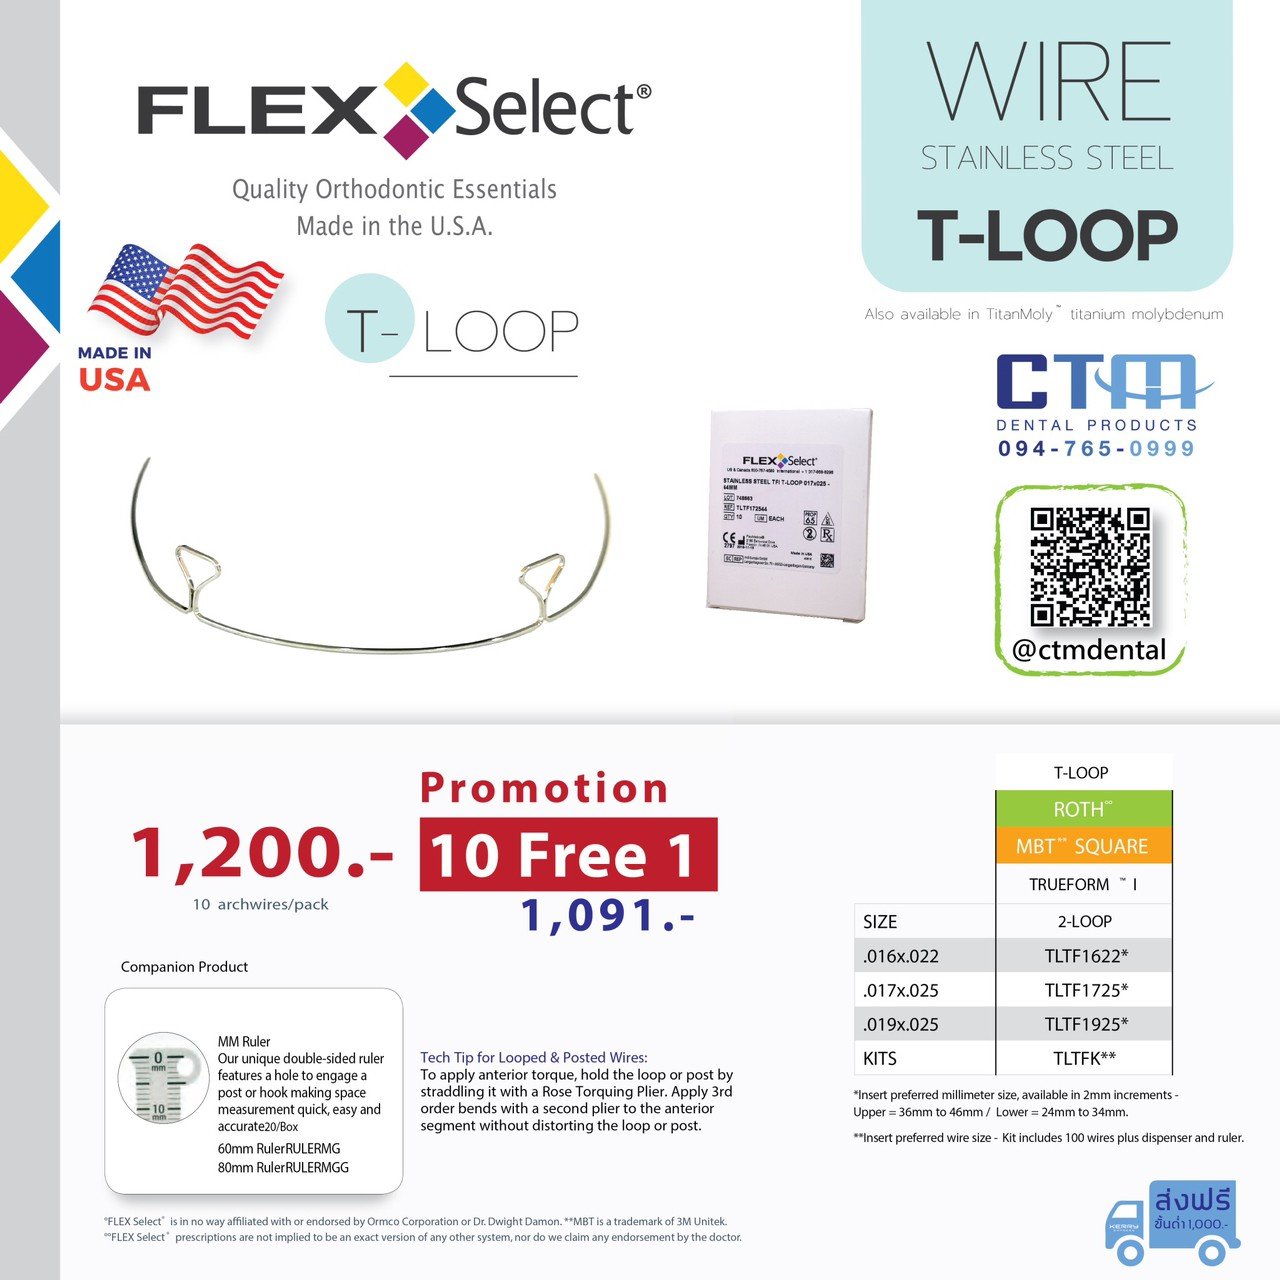 CTM FLEX Select WIRE STAINLESS STEEL T-LOOP